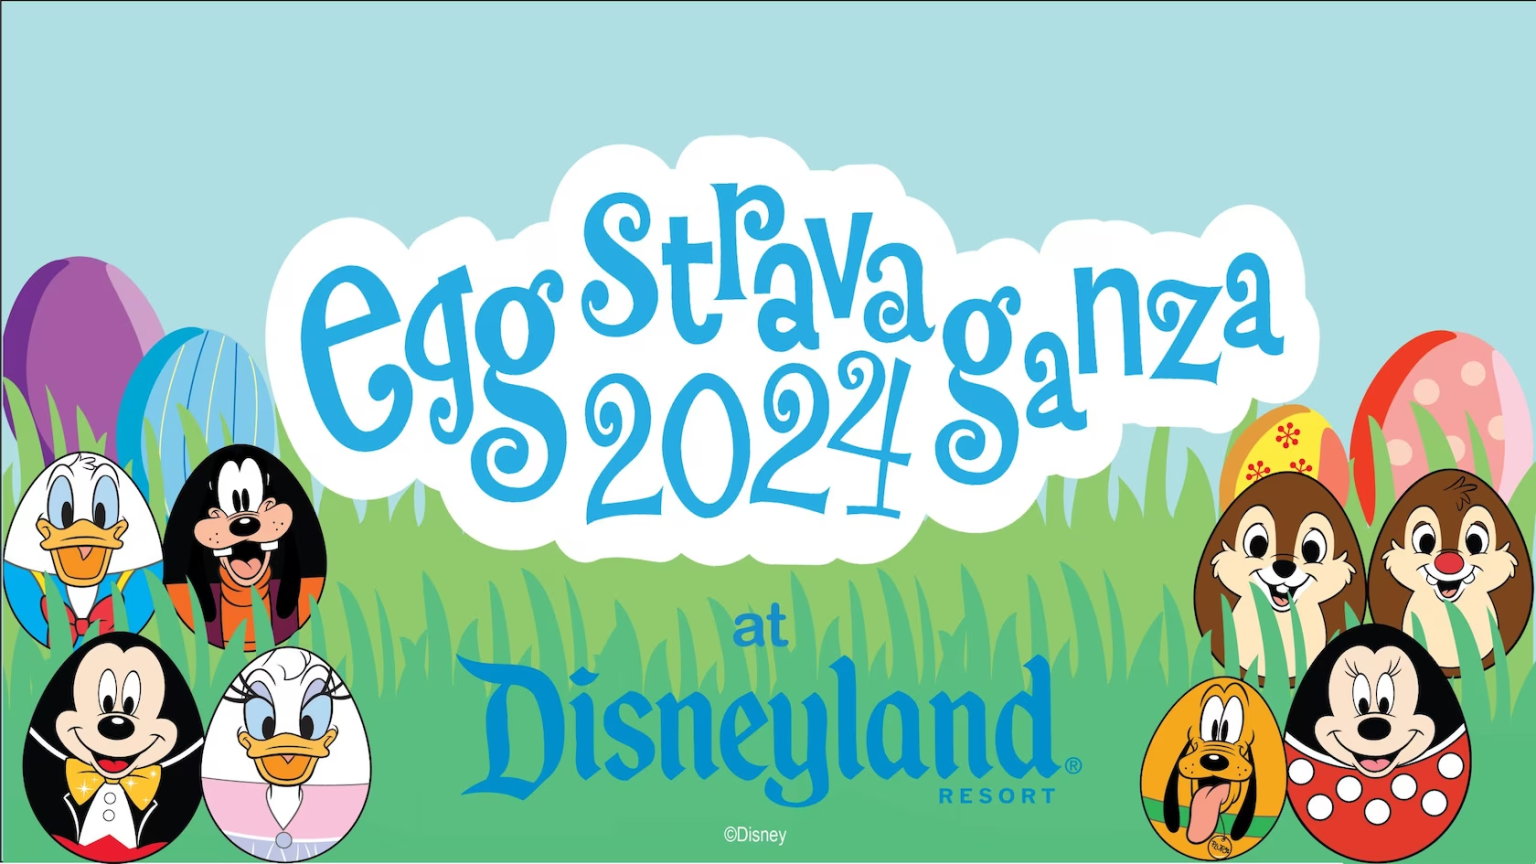 Eggstravaganza 2024 the disney food blog